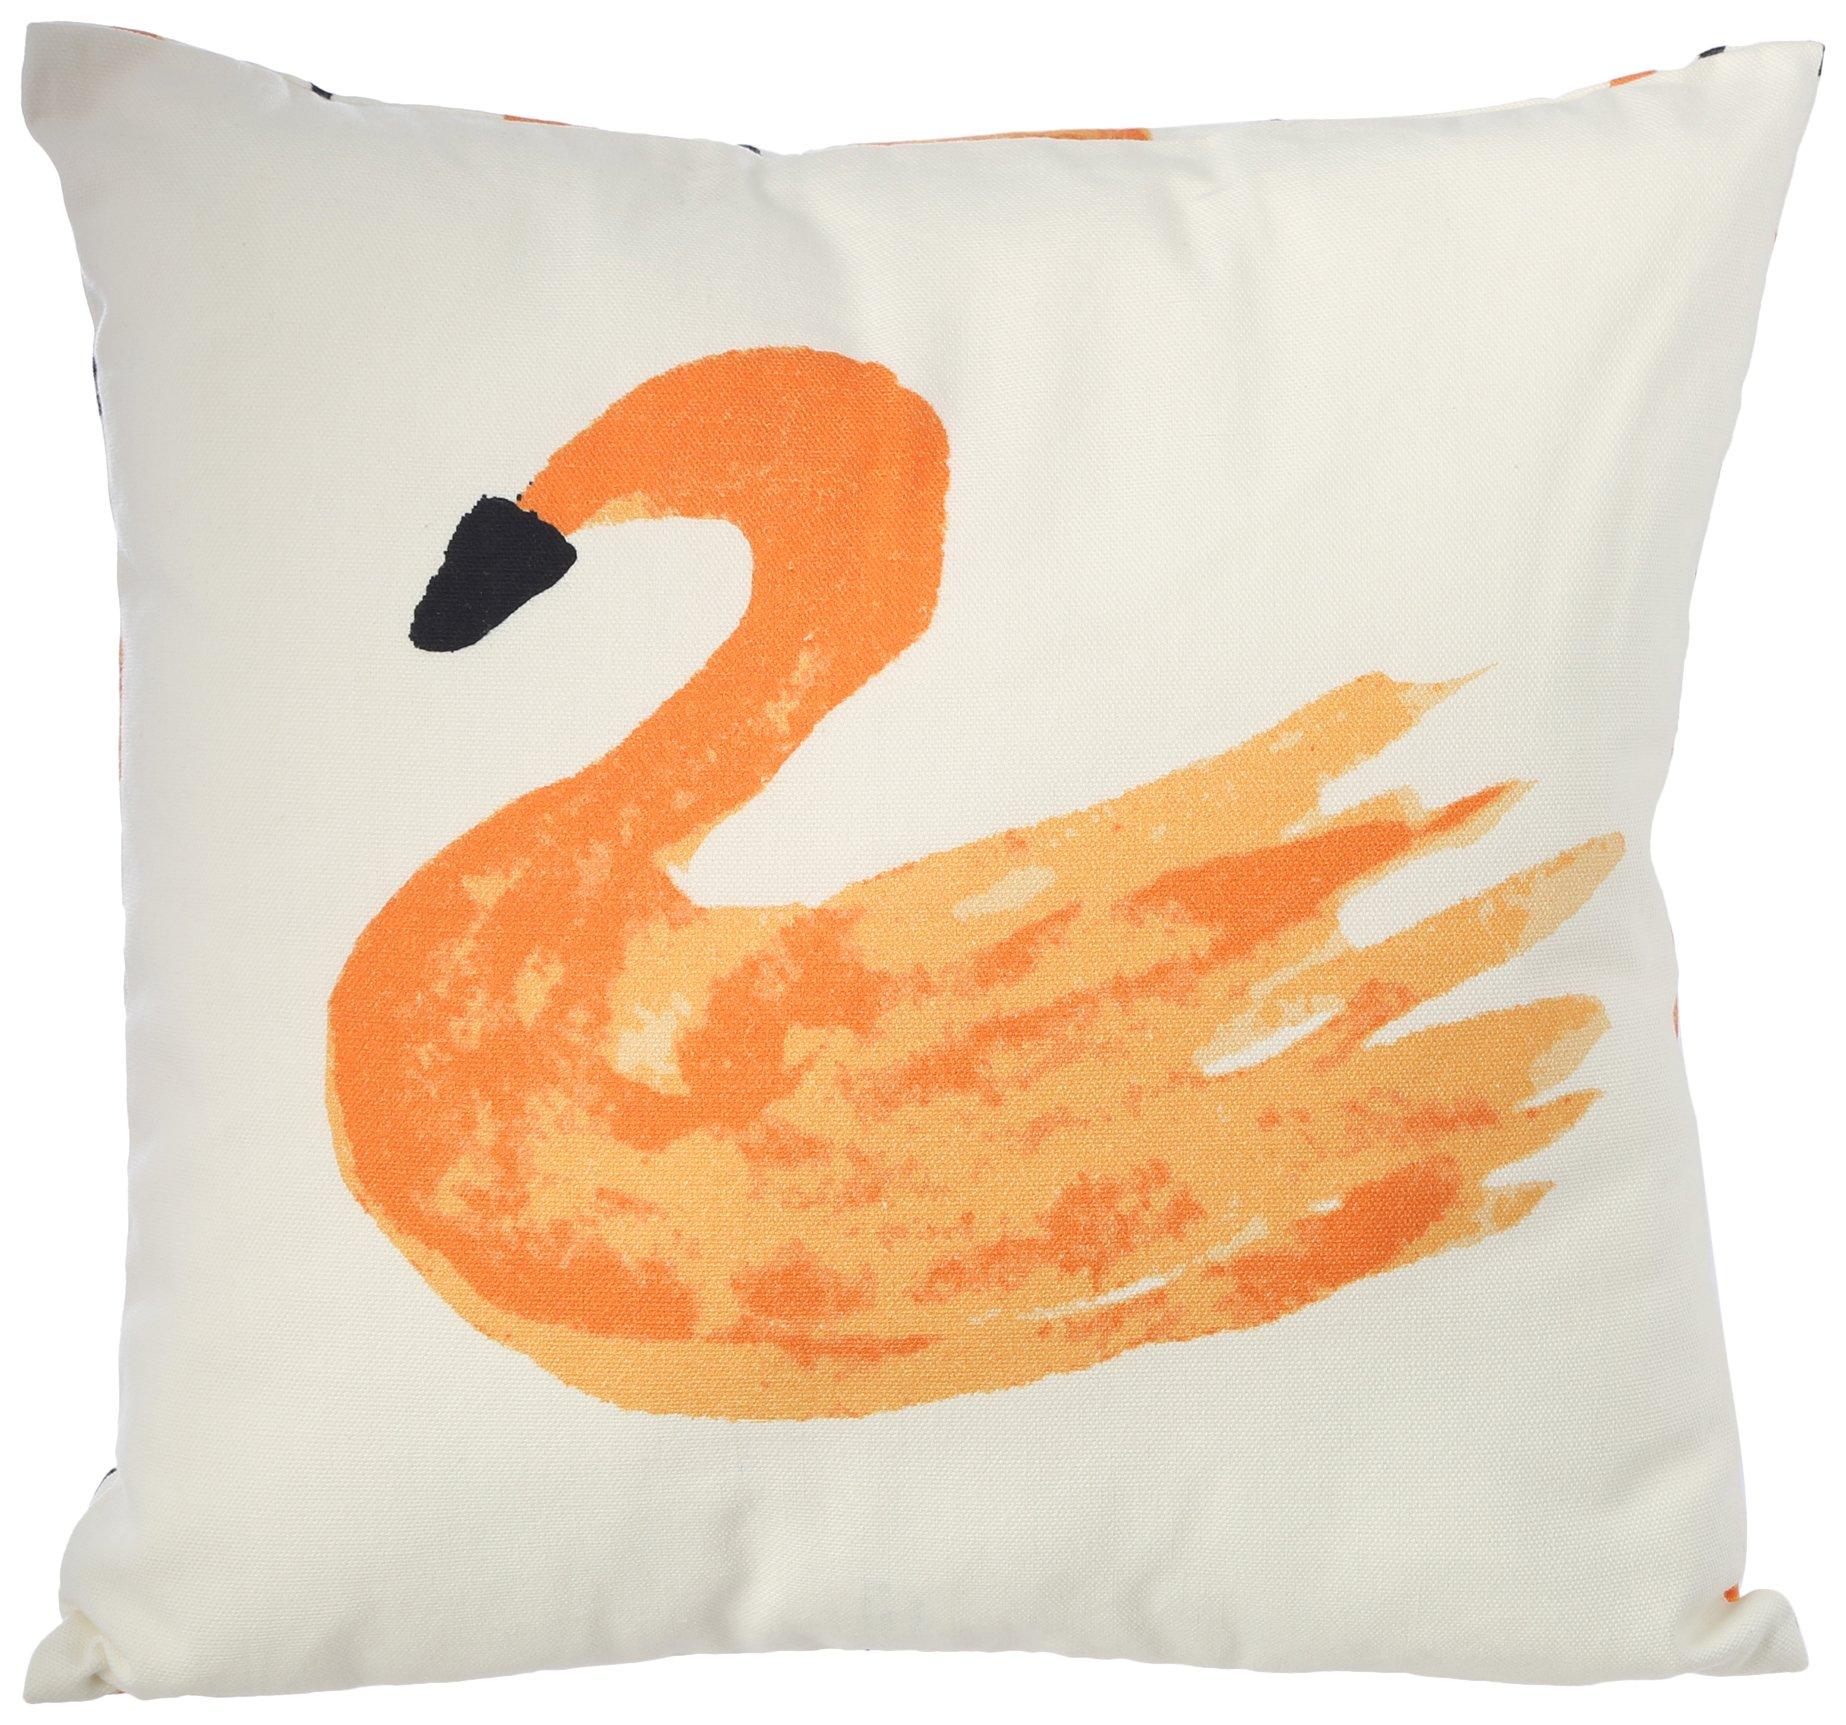 Peking Handicraft 16x16 Swan Pattern Decorative Pillow